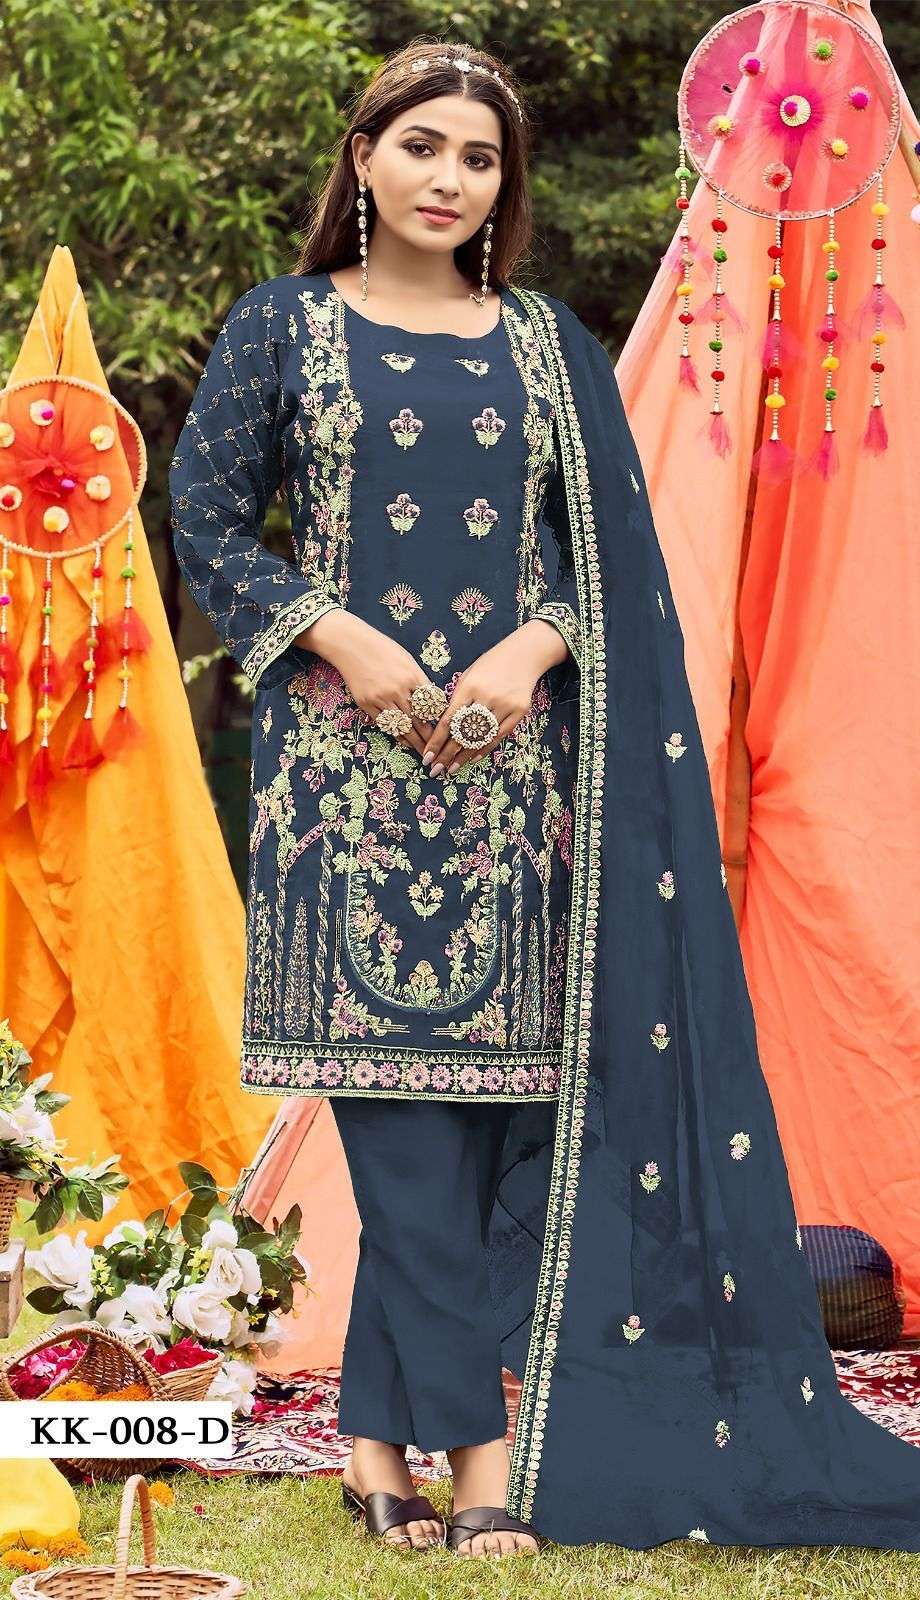 kross kulture kk-008 series stylish look designer latest pakistani suits manufacturer surat